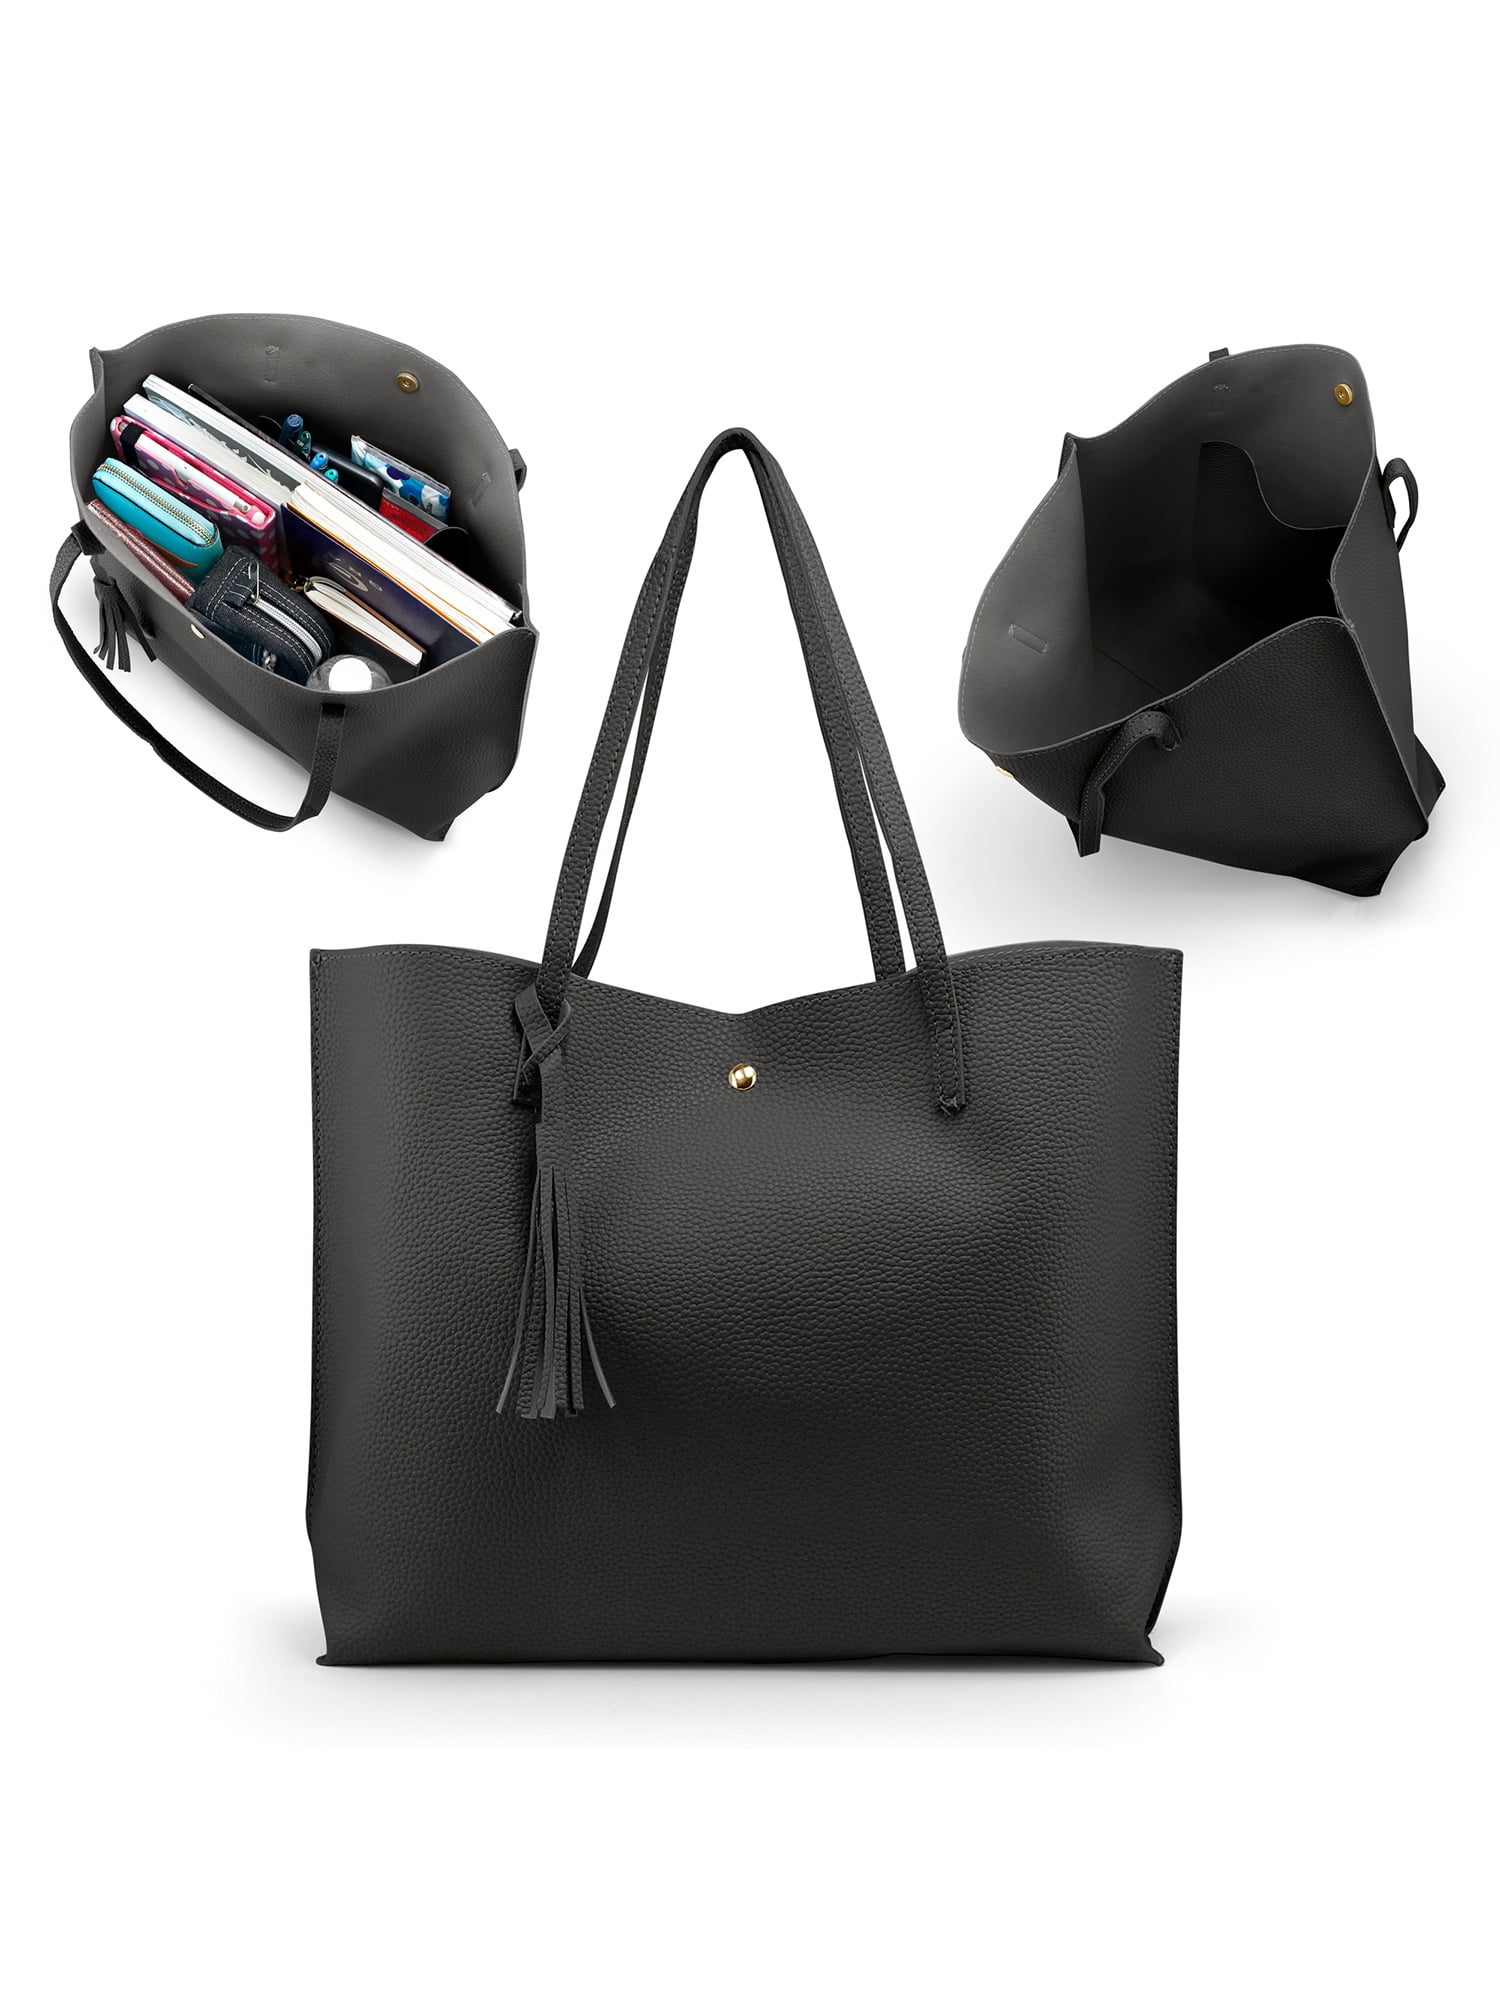 Ladies Women handbag shoulder bag work bag Messenger Tote Quilted Grab Tote Bag 